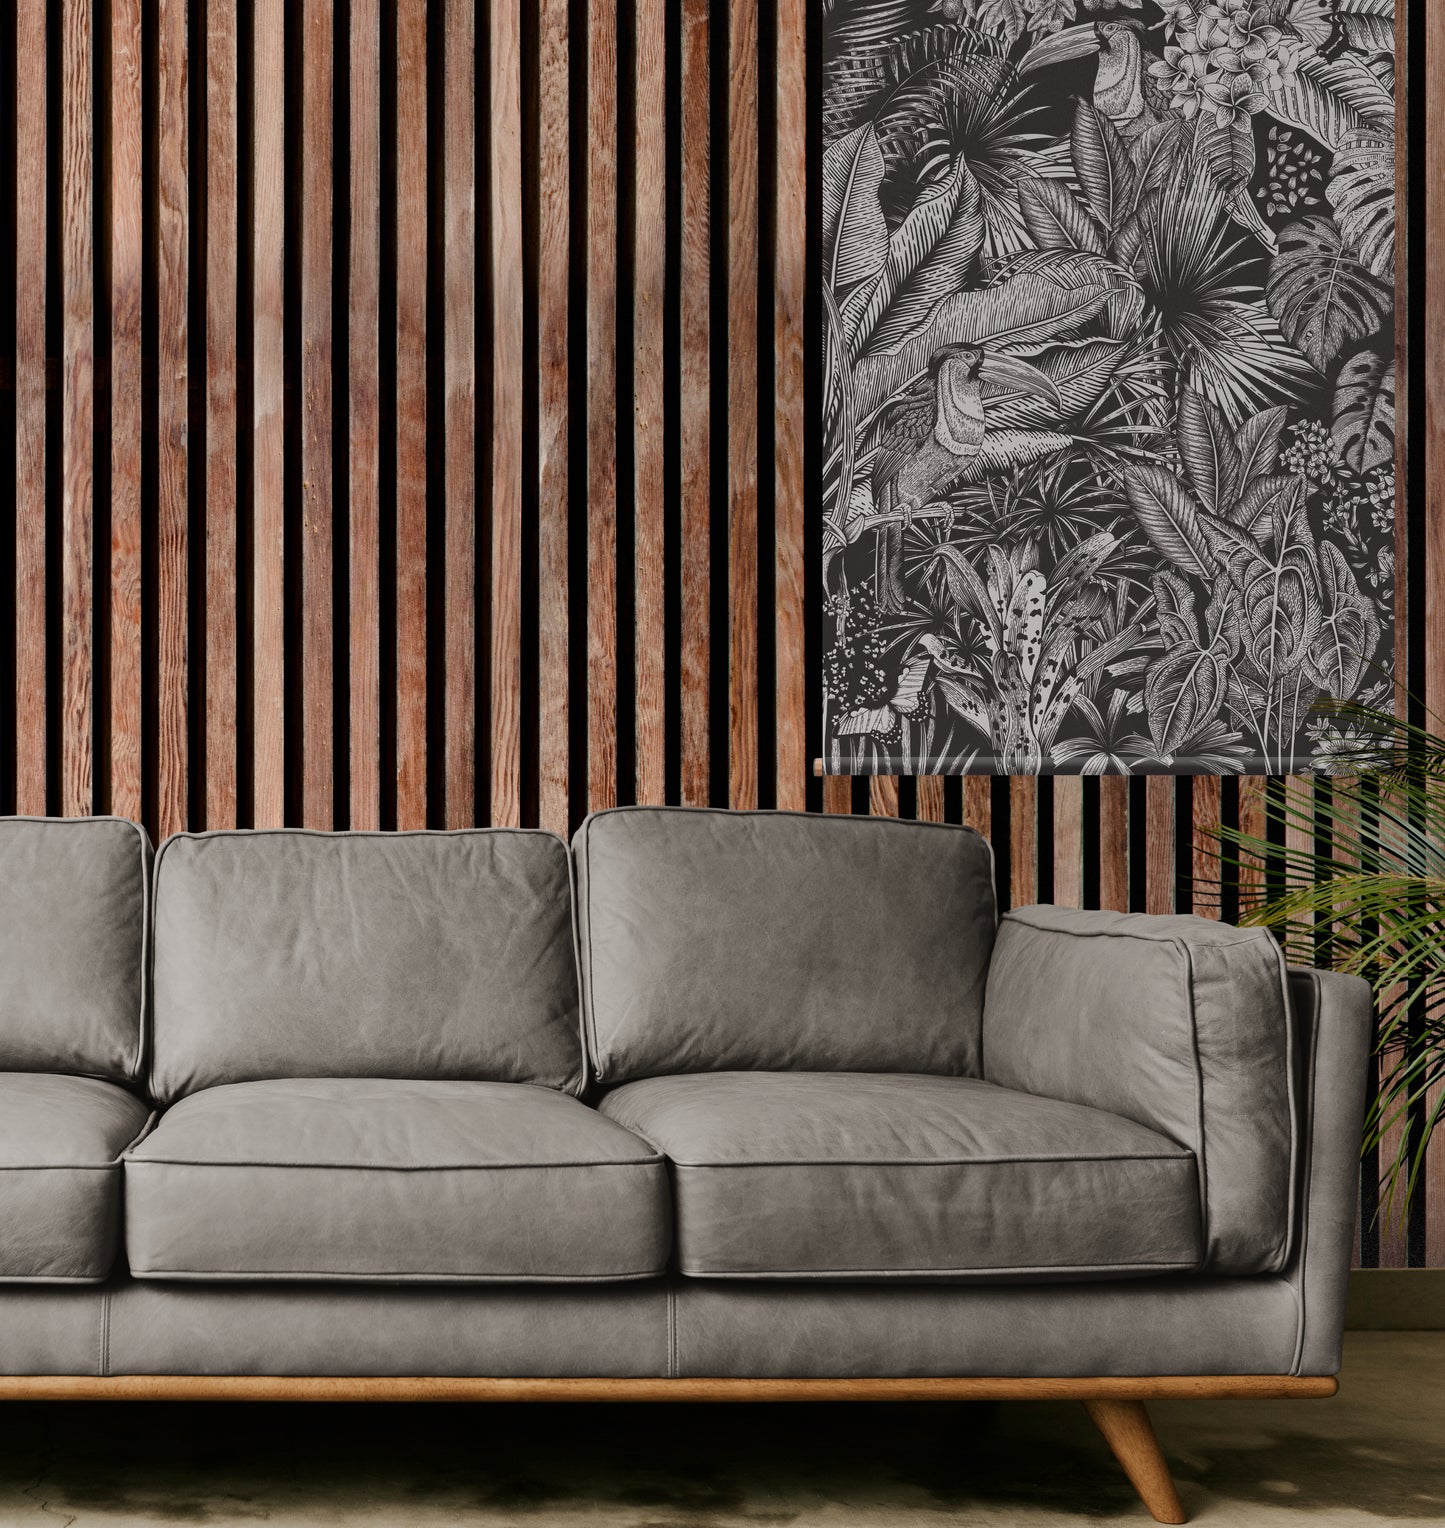 Exotic Botanical Jungle textile wall hanging